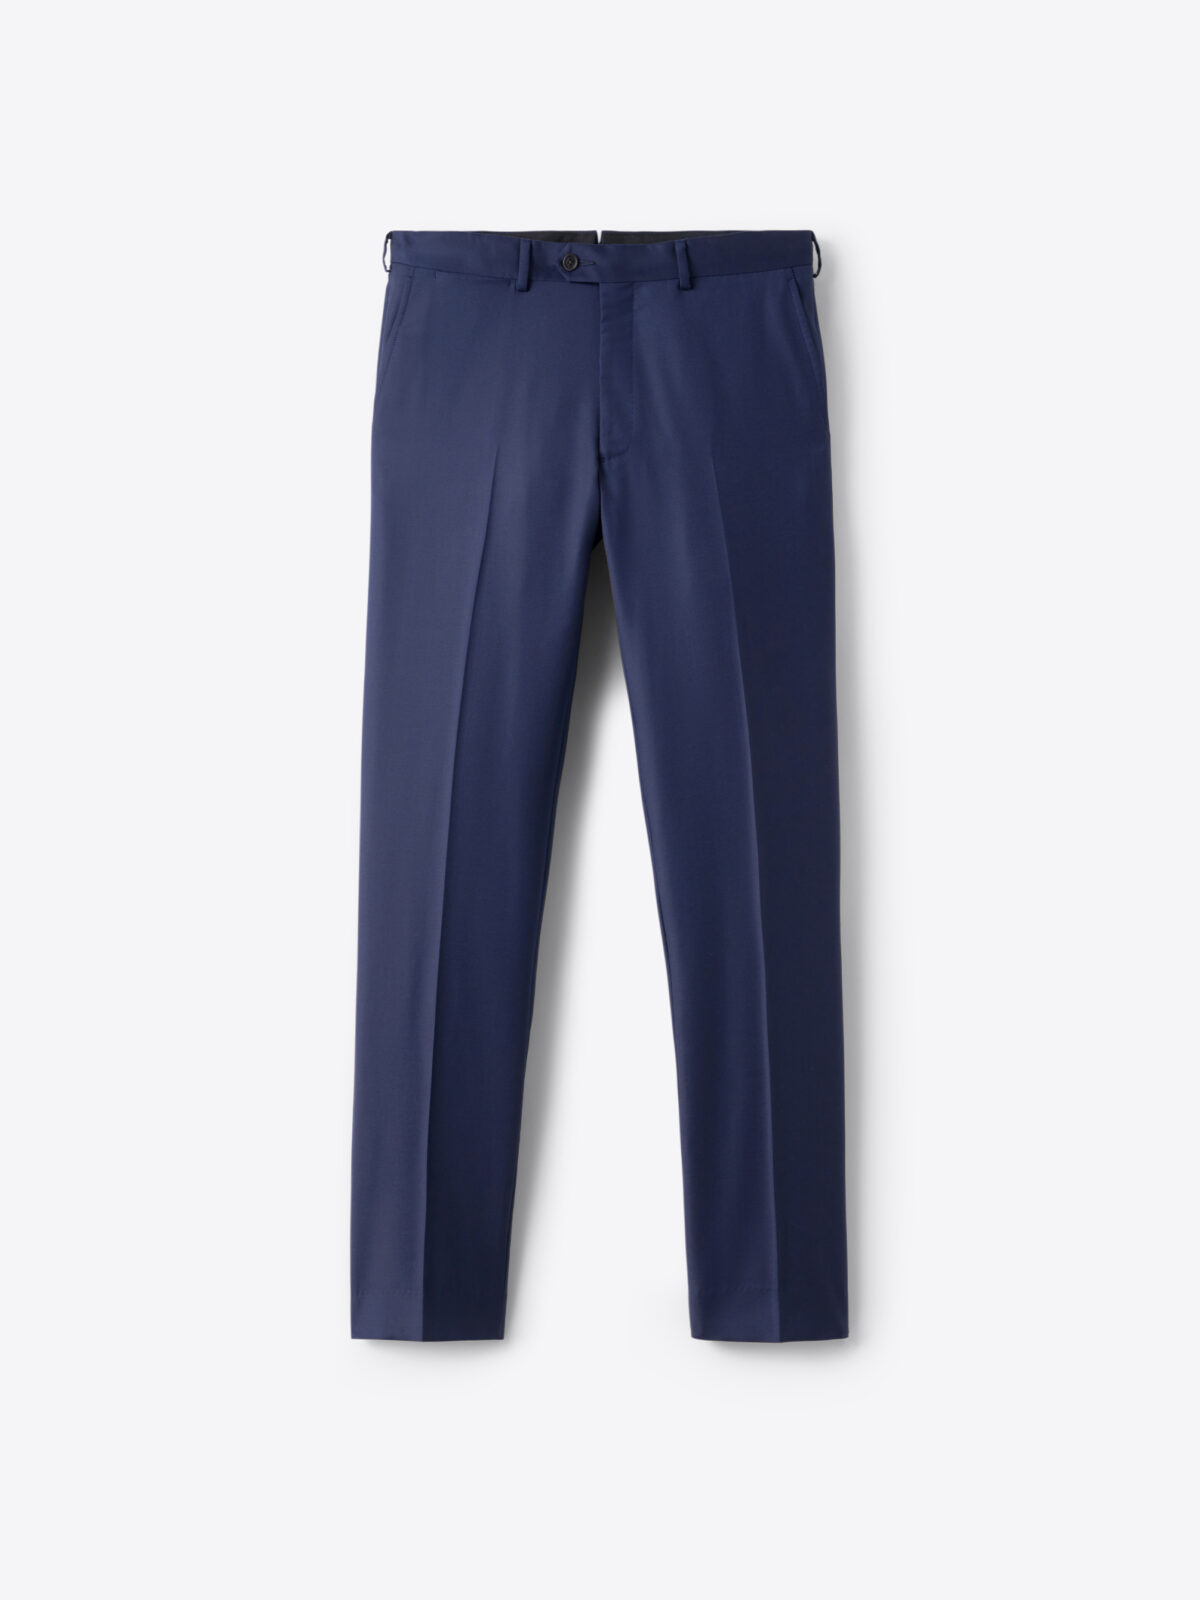 Great Deals Trouser Suit in Navy Blue Silk Fabric LSTV113226